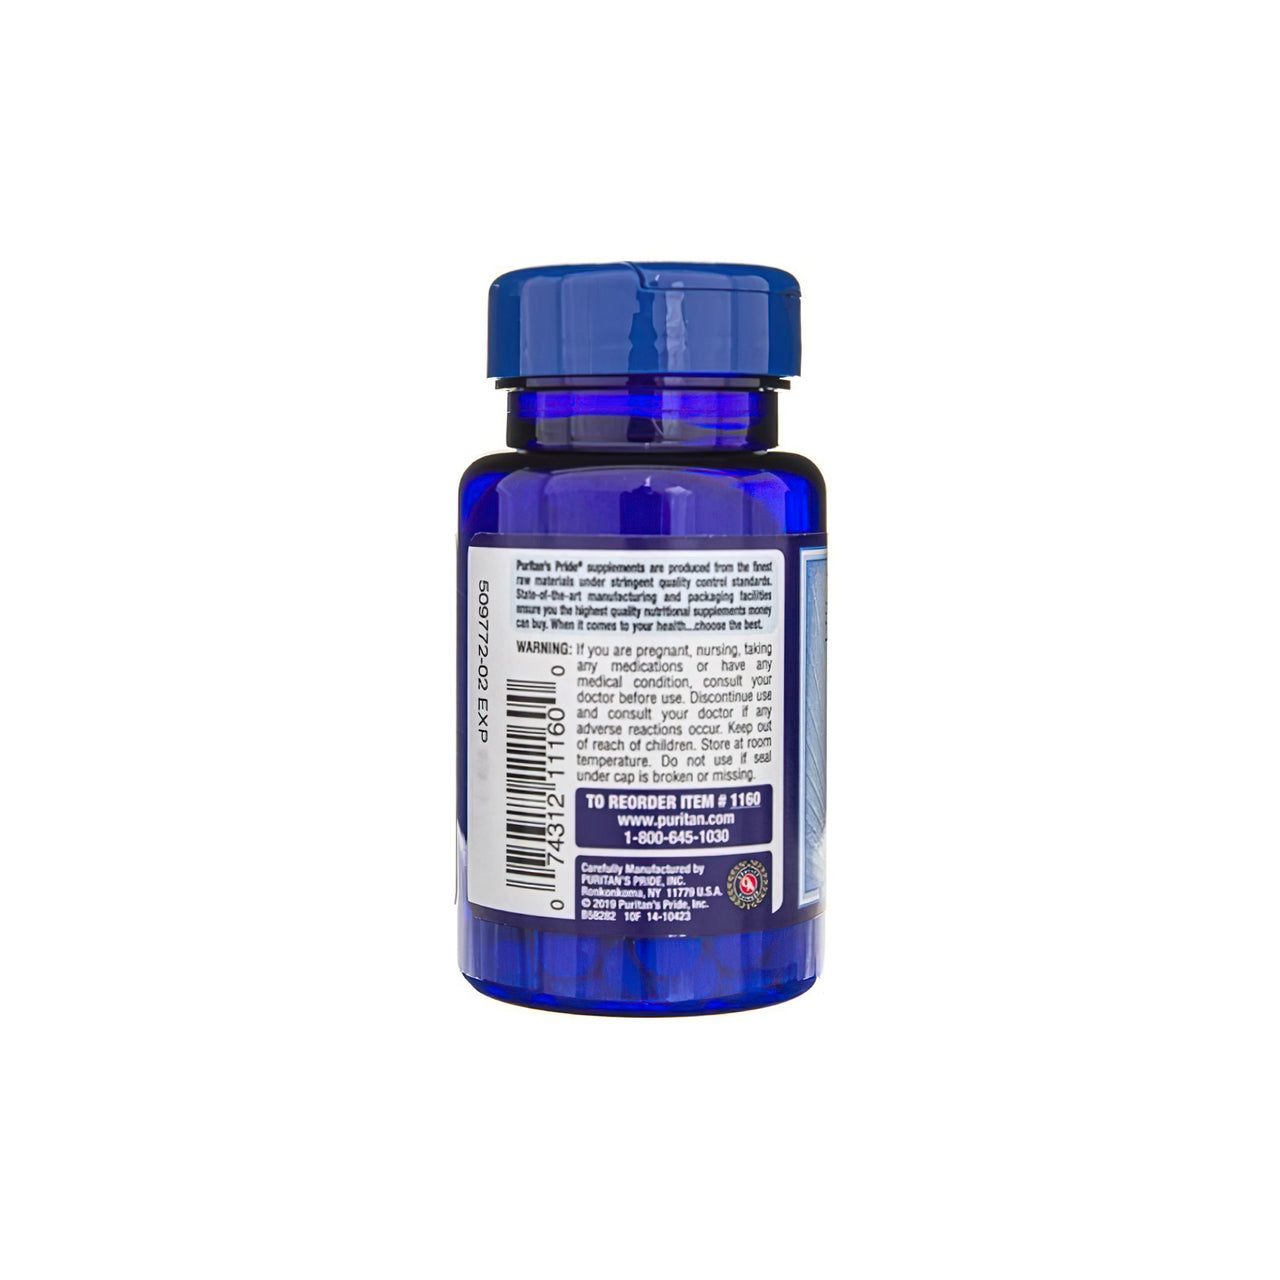 Uma garrafa de Puritan's Pride Vitamina B-6 Piridoxina 50 mg 100 comprimidos, promovendo a saúde cardiovascular e o metabolismo energético, sobre fundo branco.